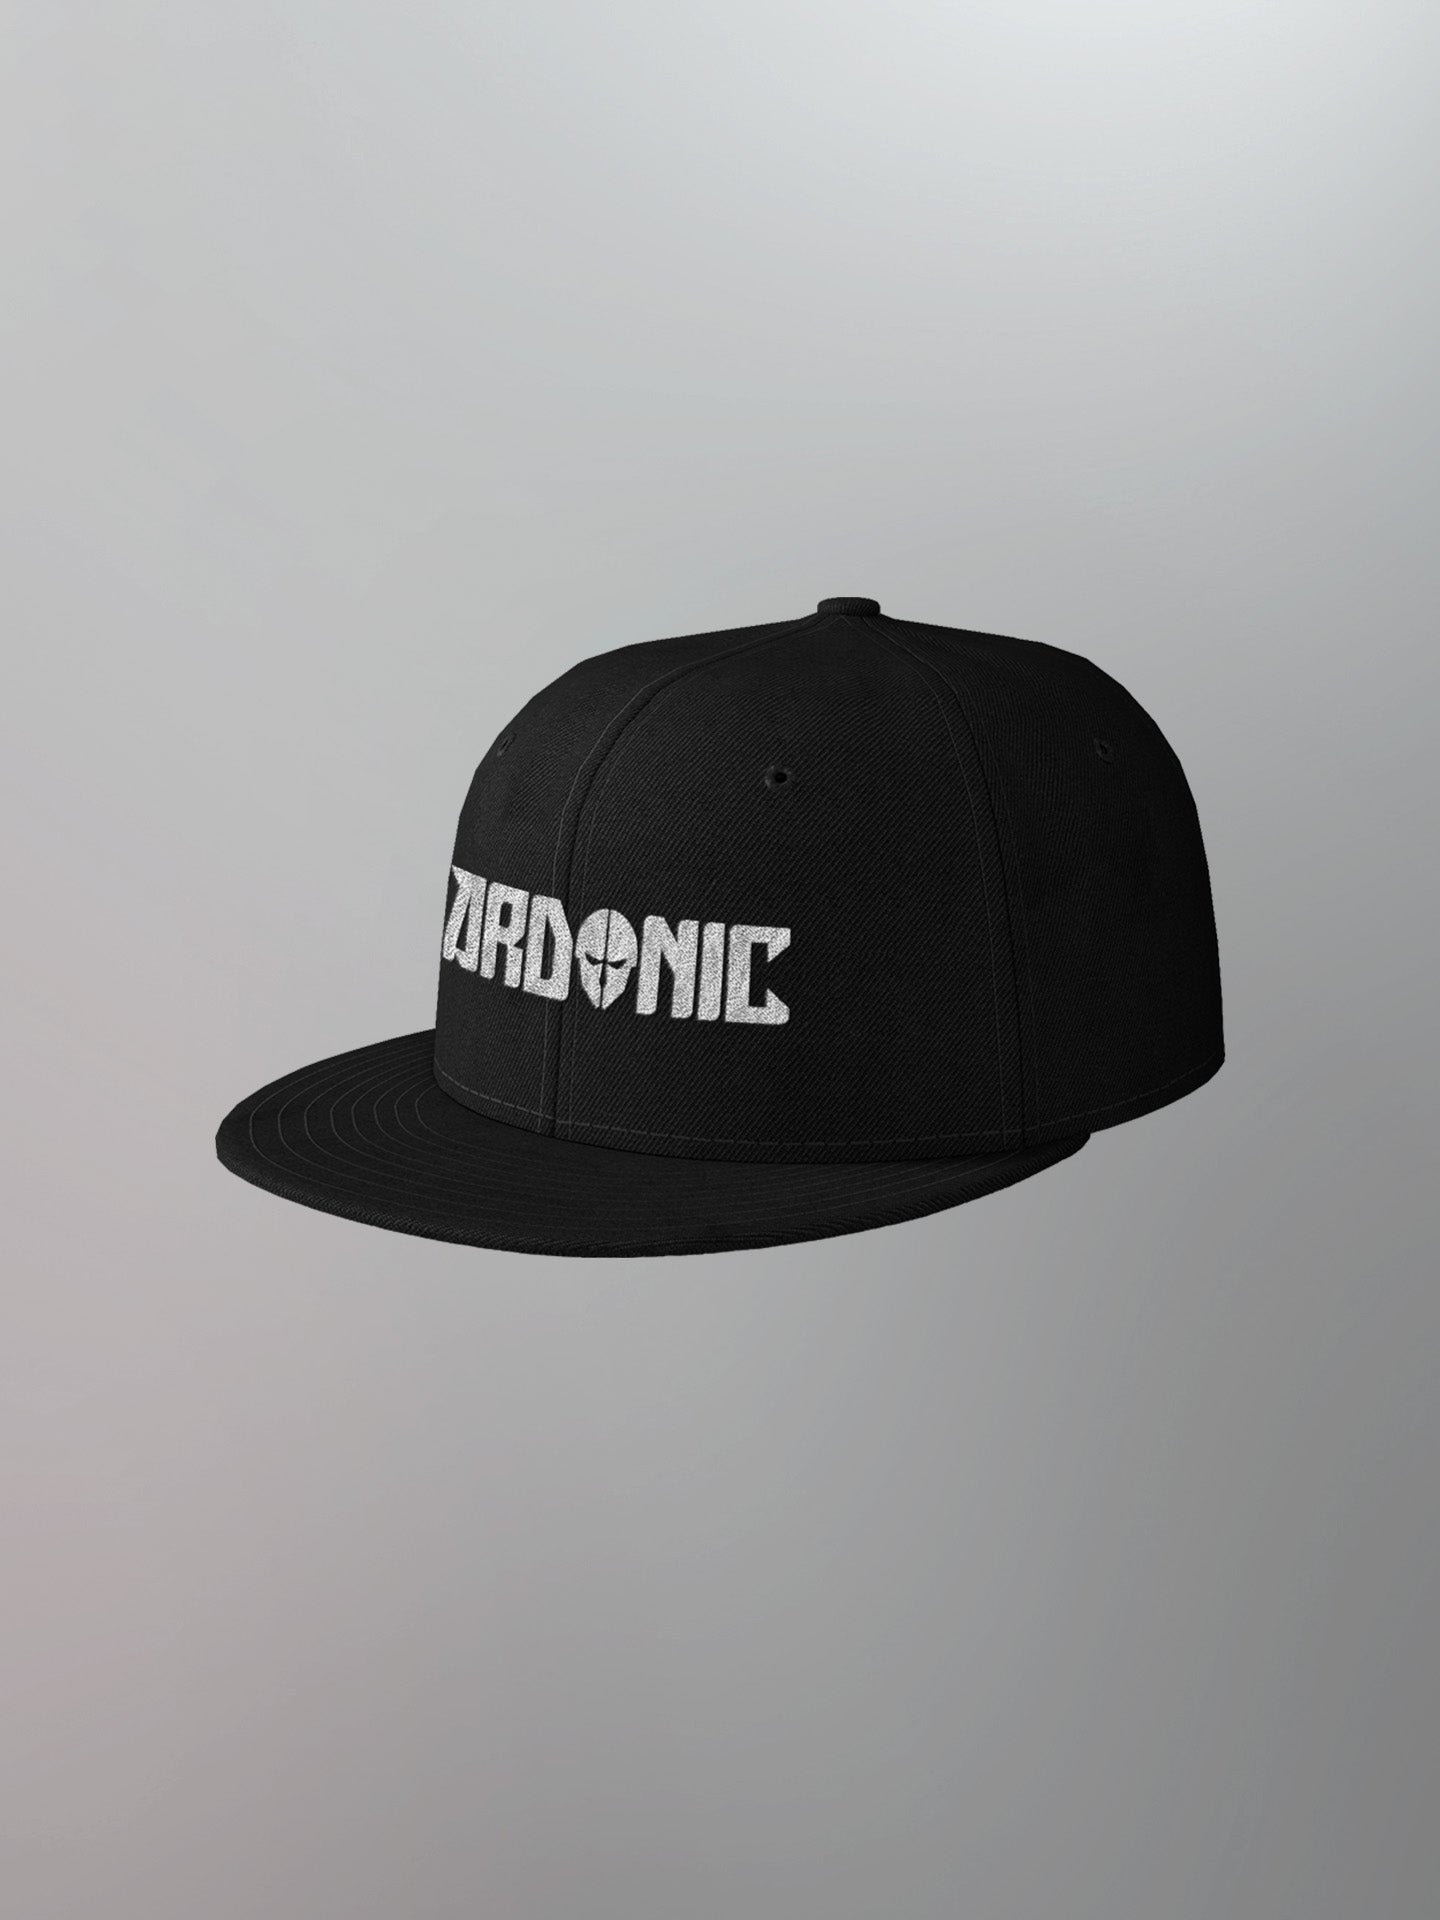 Zardonic - Logo Snapback Hat